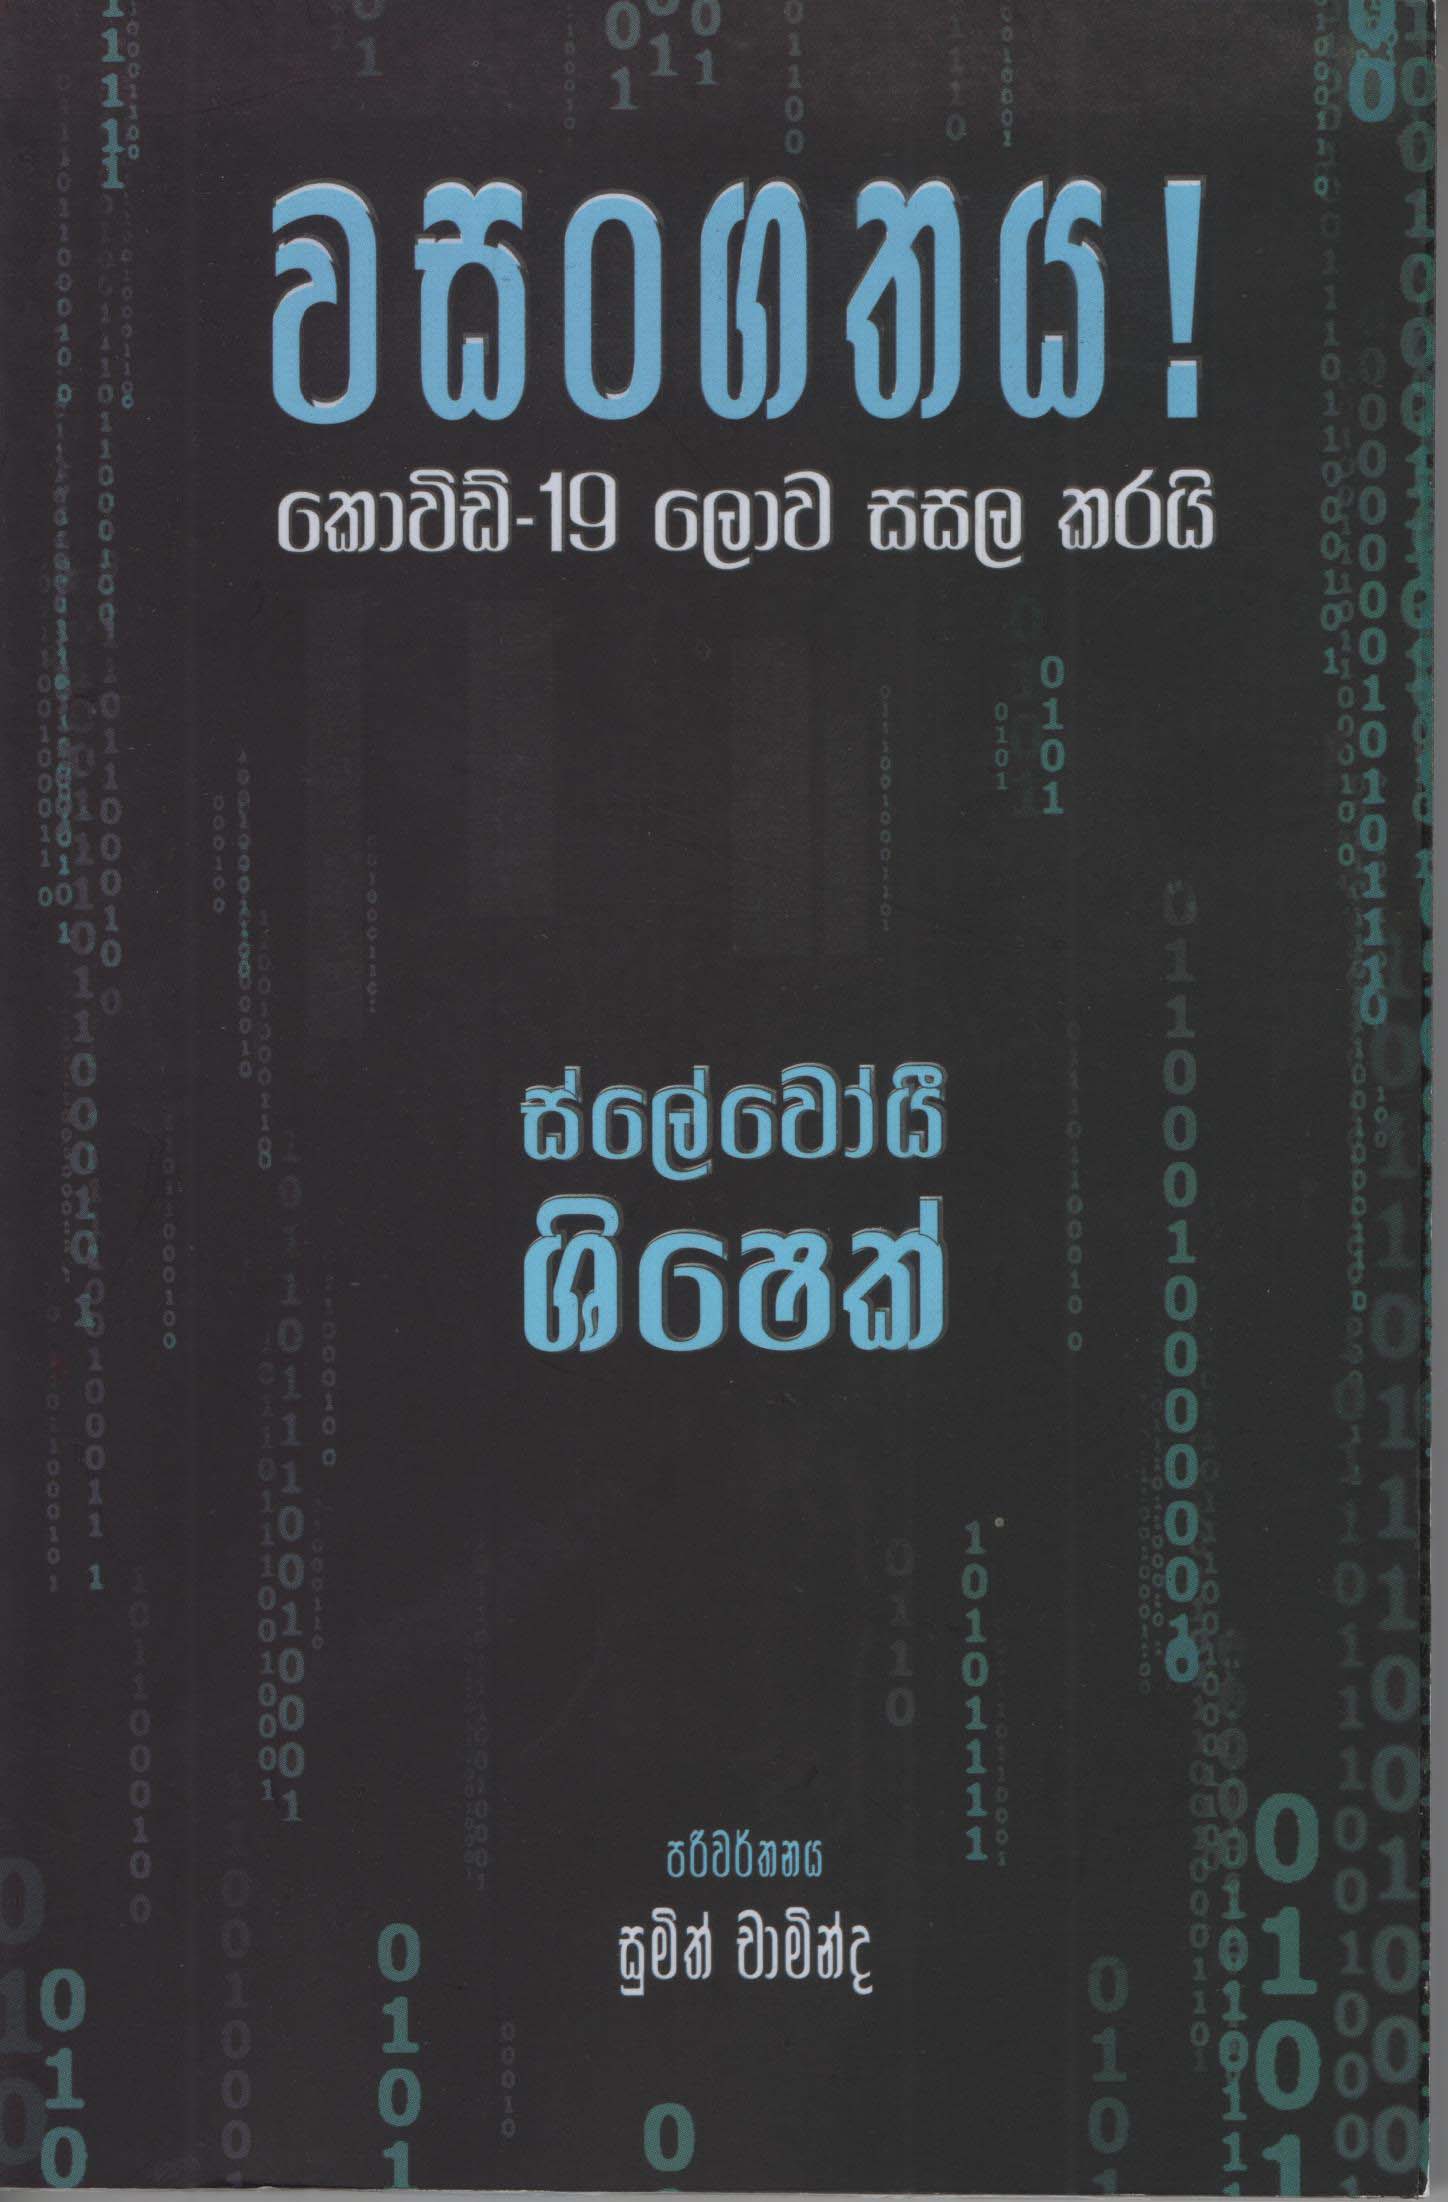 Wasangathaya Covid 19 Lowa Sasala Karai (Translation of Pandemic Covid 19 Shakes the World by Salvoj Zizek)